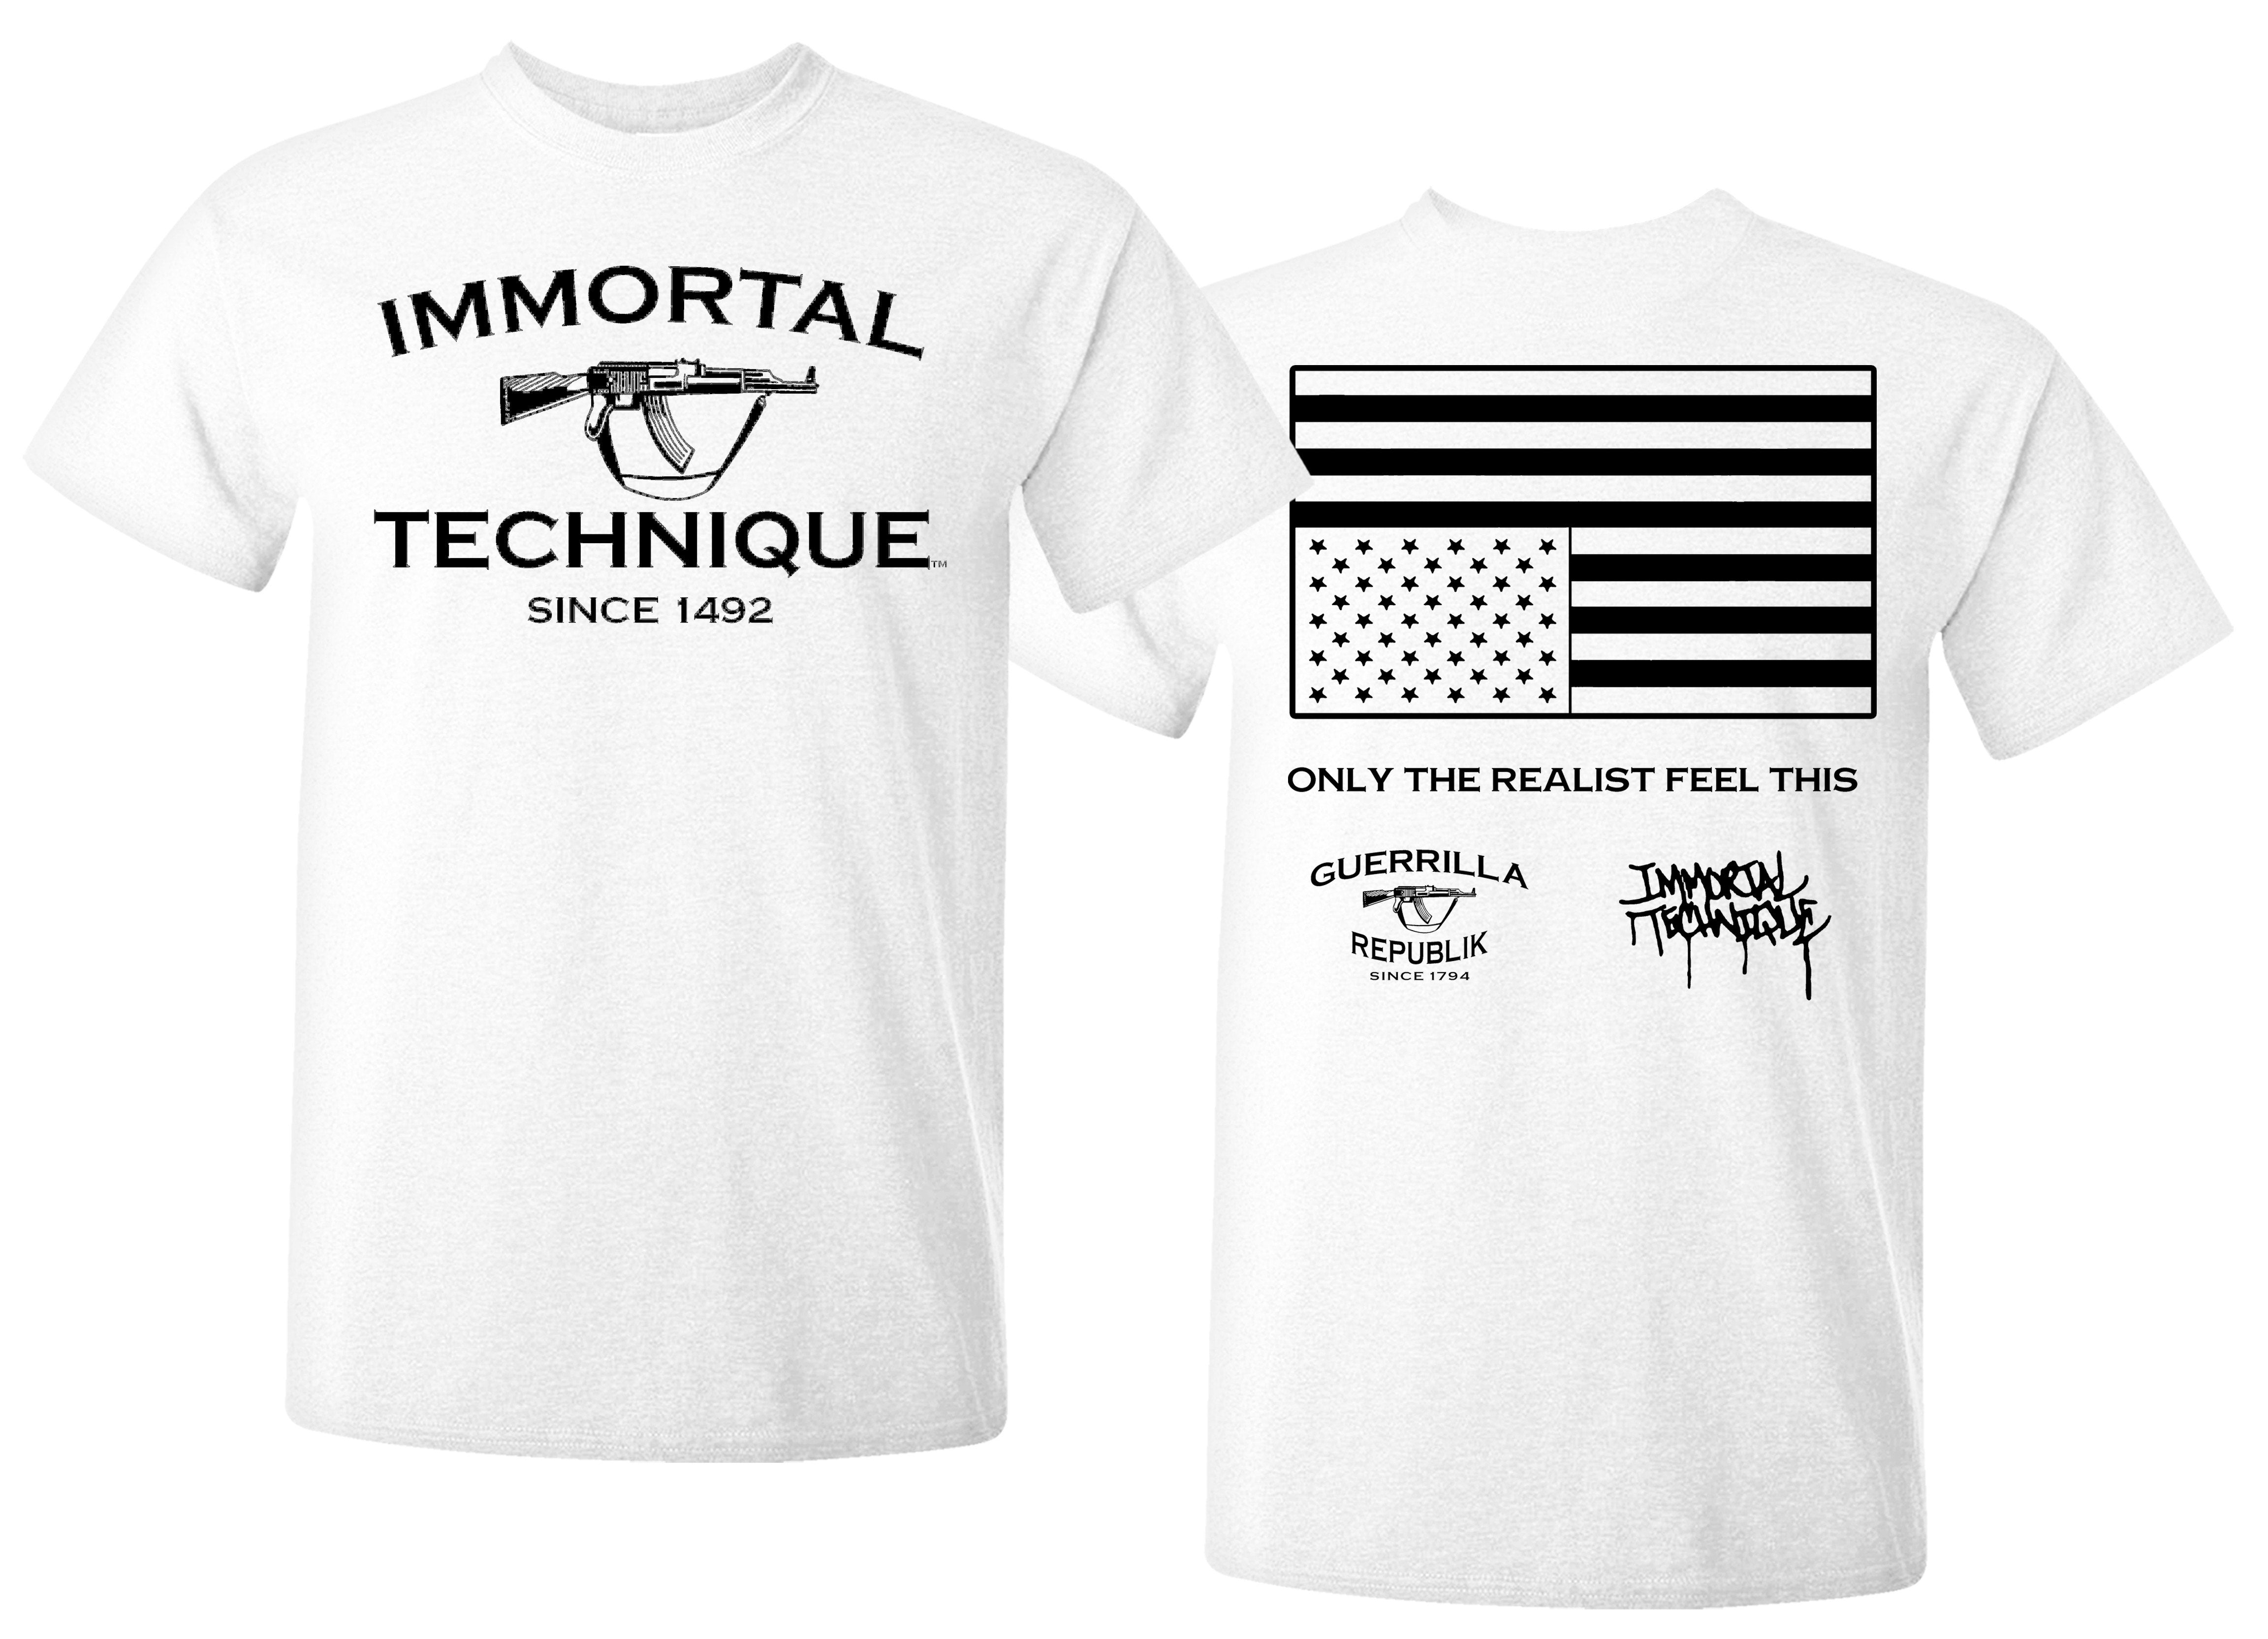 I'm immortal Classic T-Shirt by infinity-khd